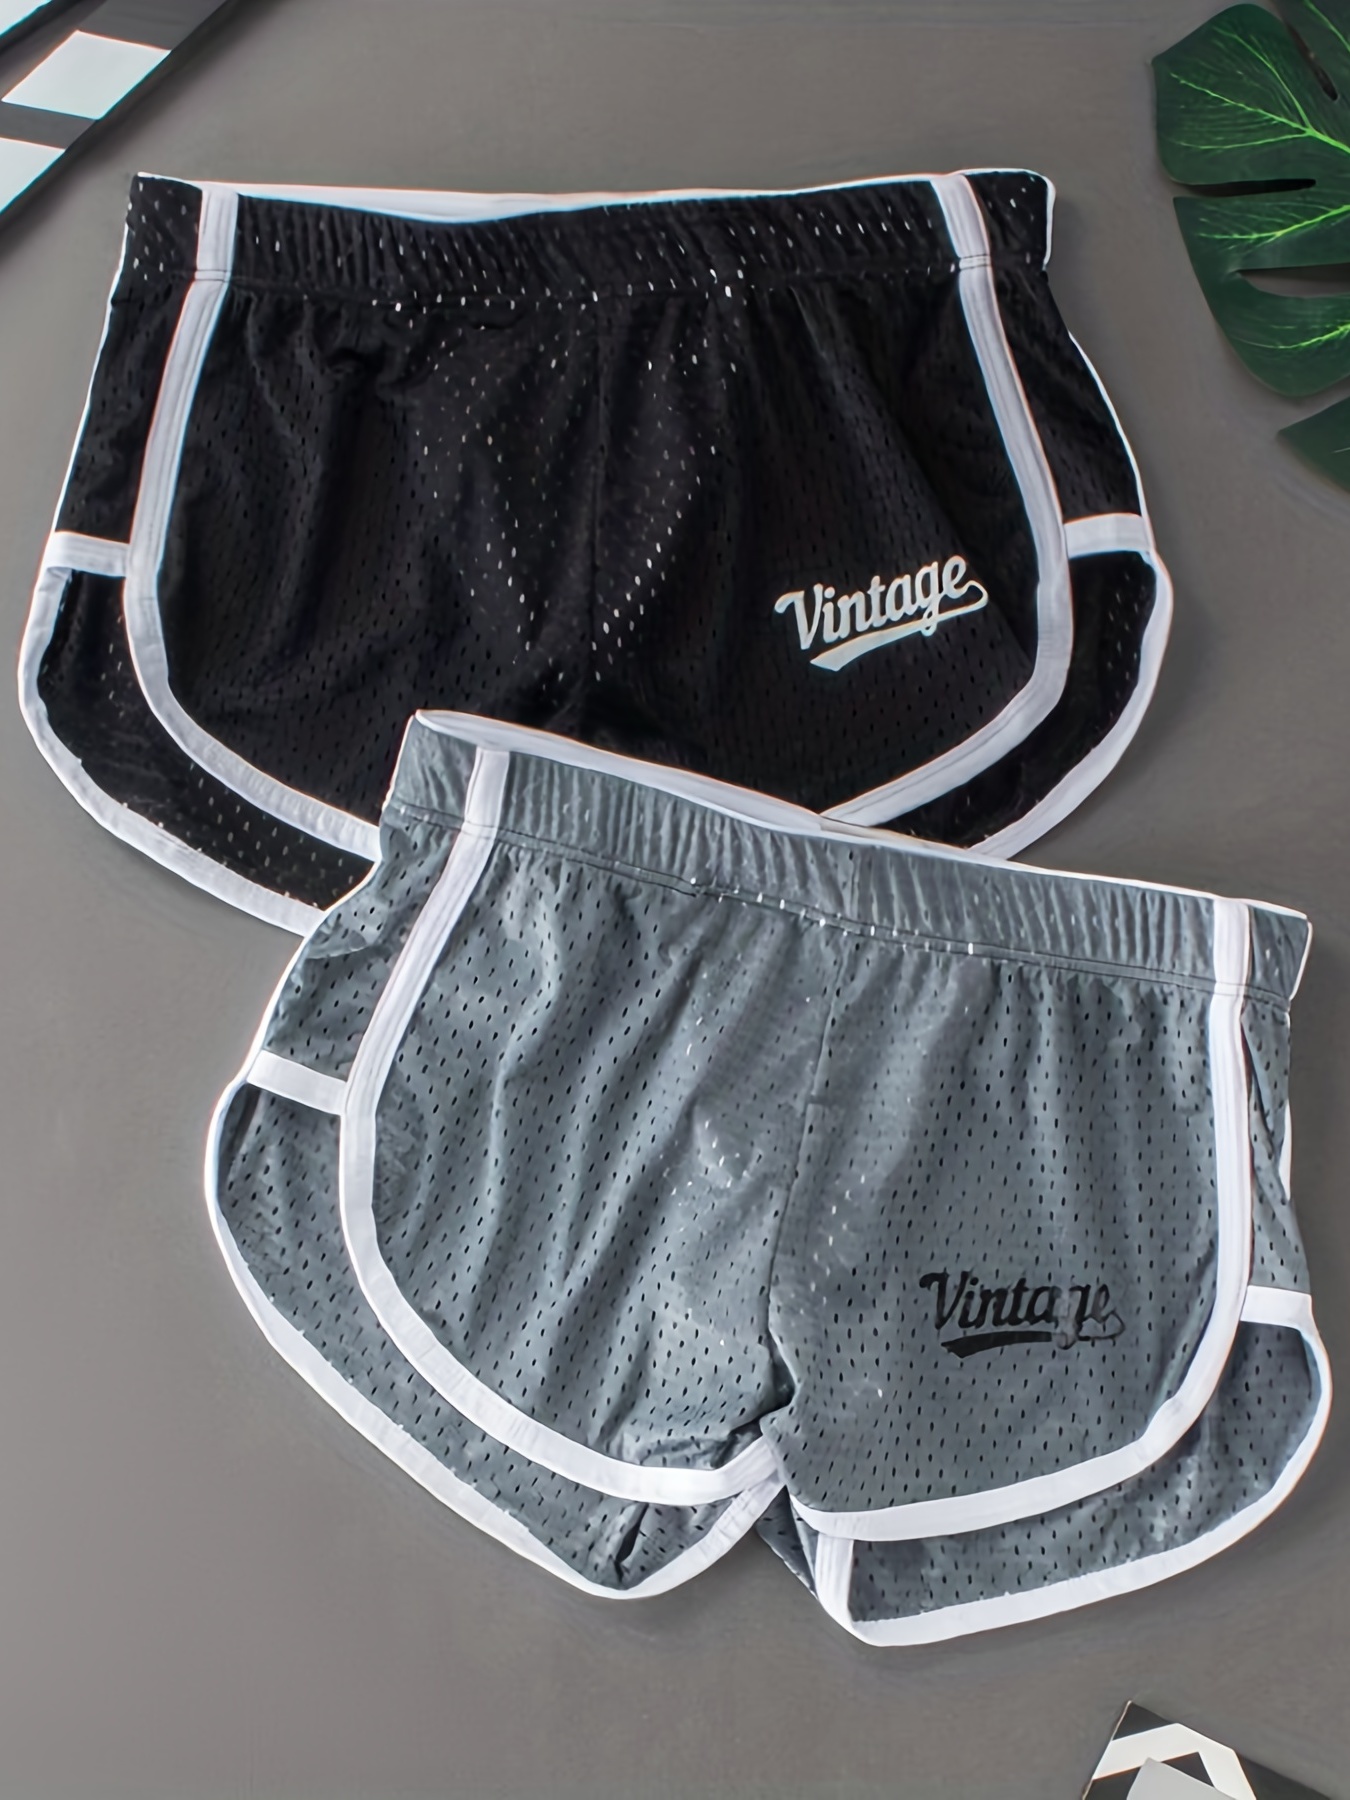 Dame Edna Men's Boxer Briefs. Tribute pair of underwear to the